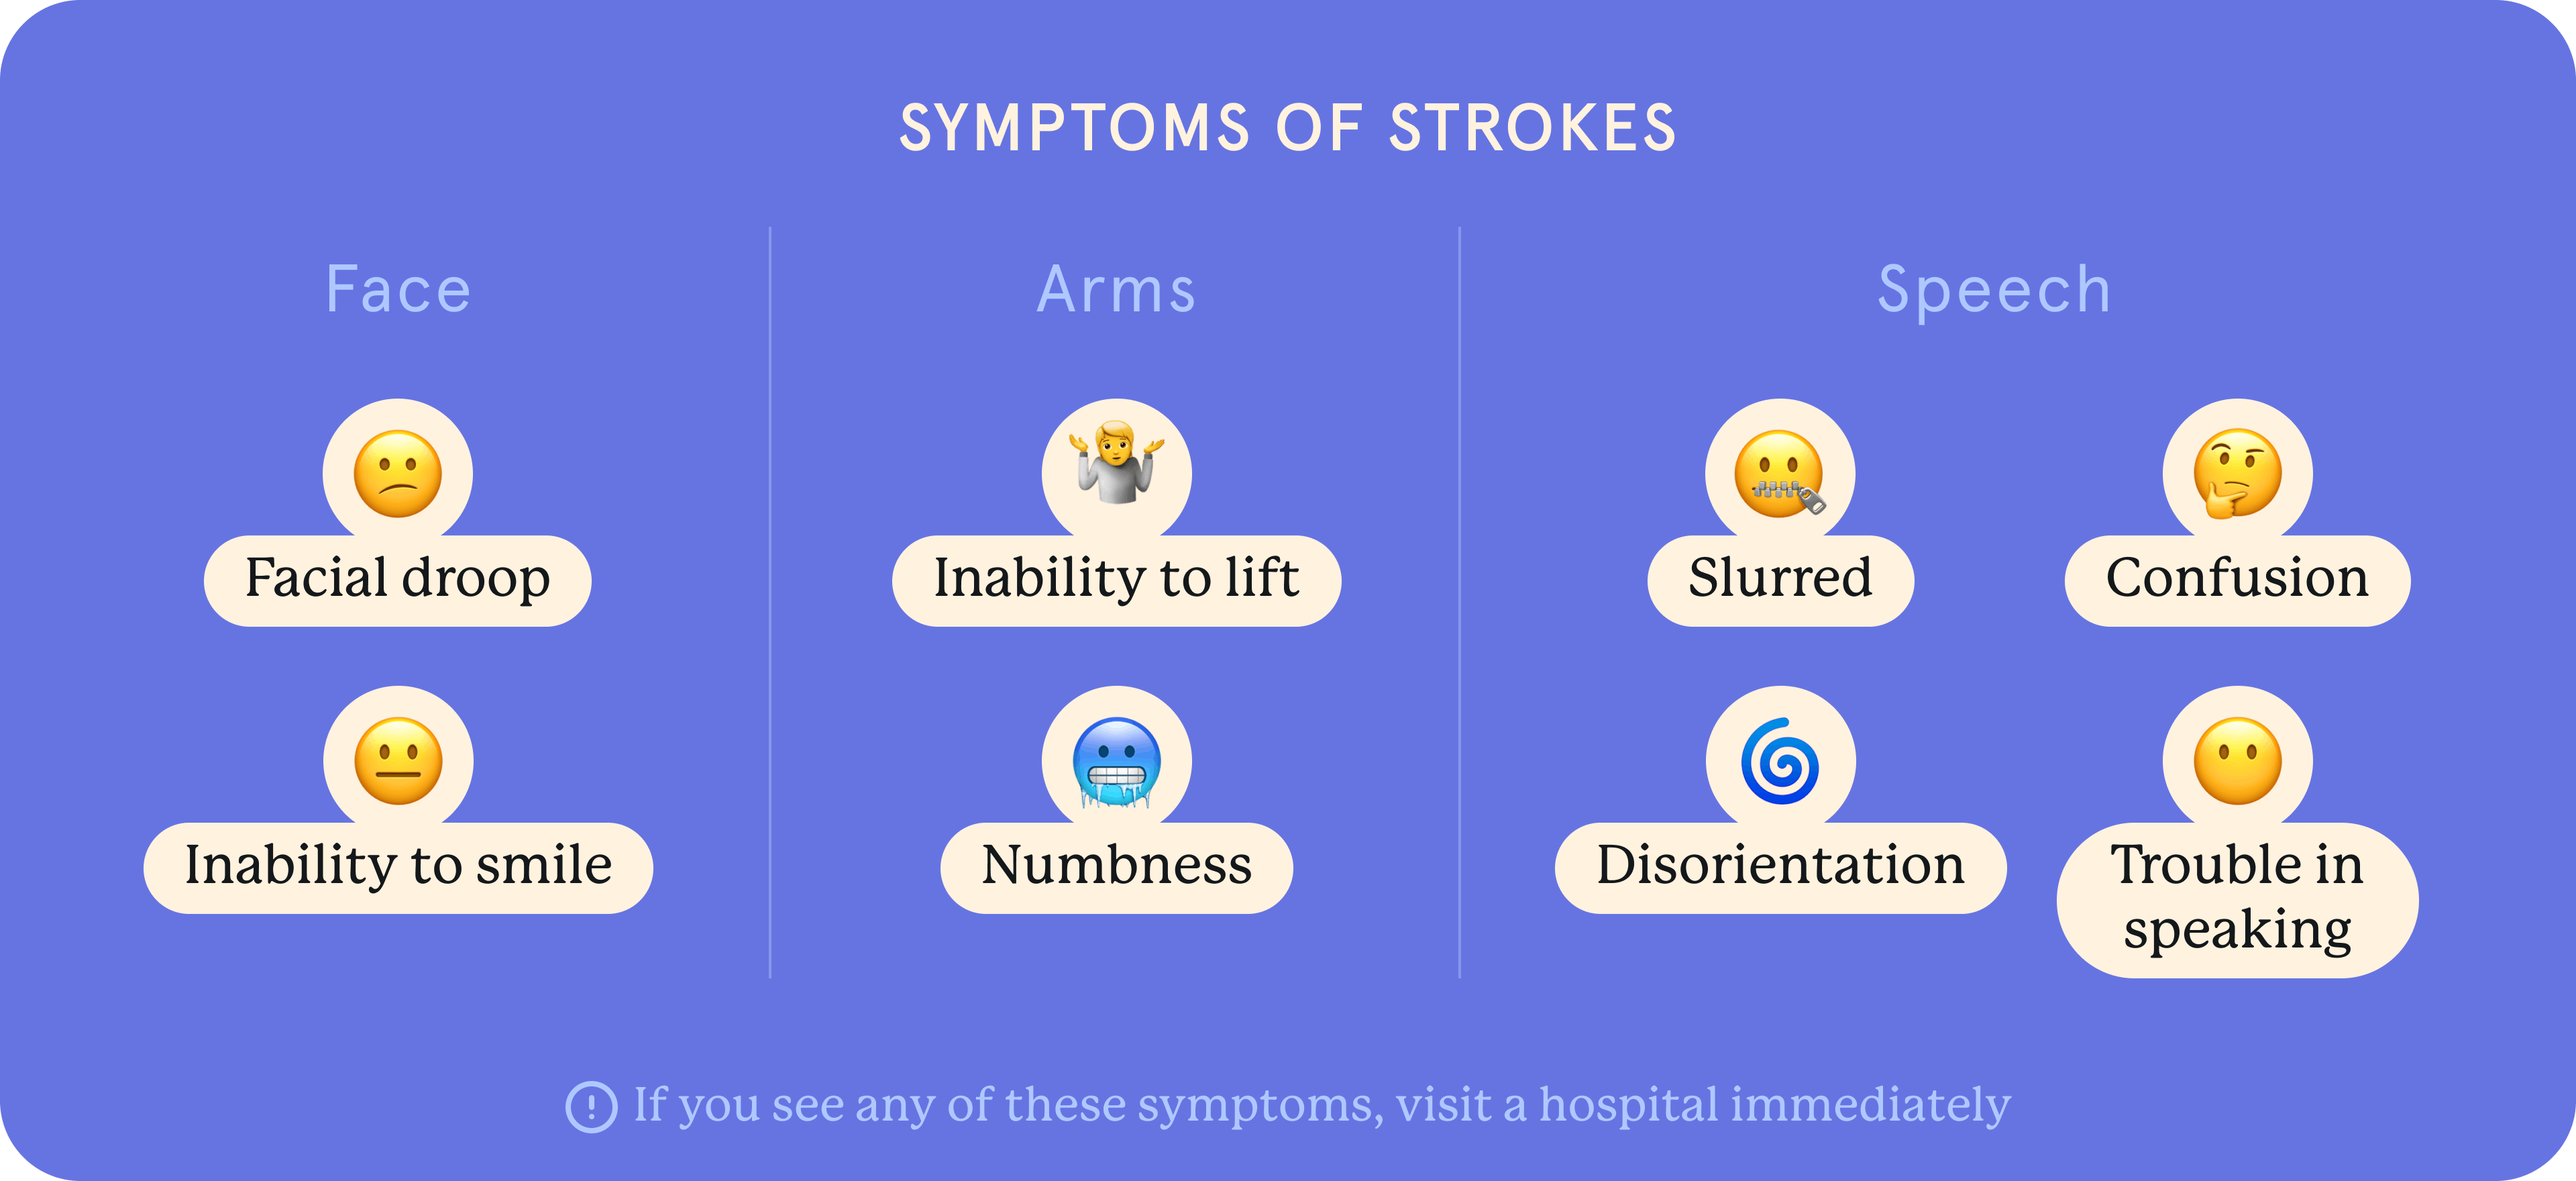 A pictorial representation of symptoms of stroke